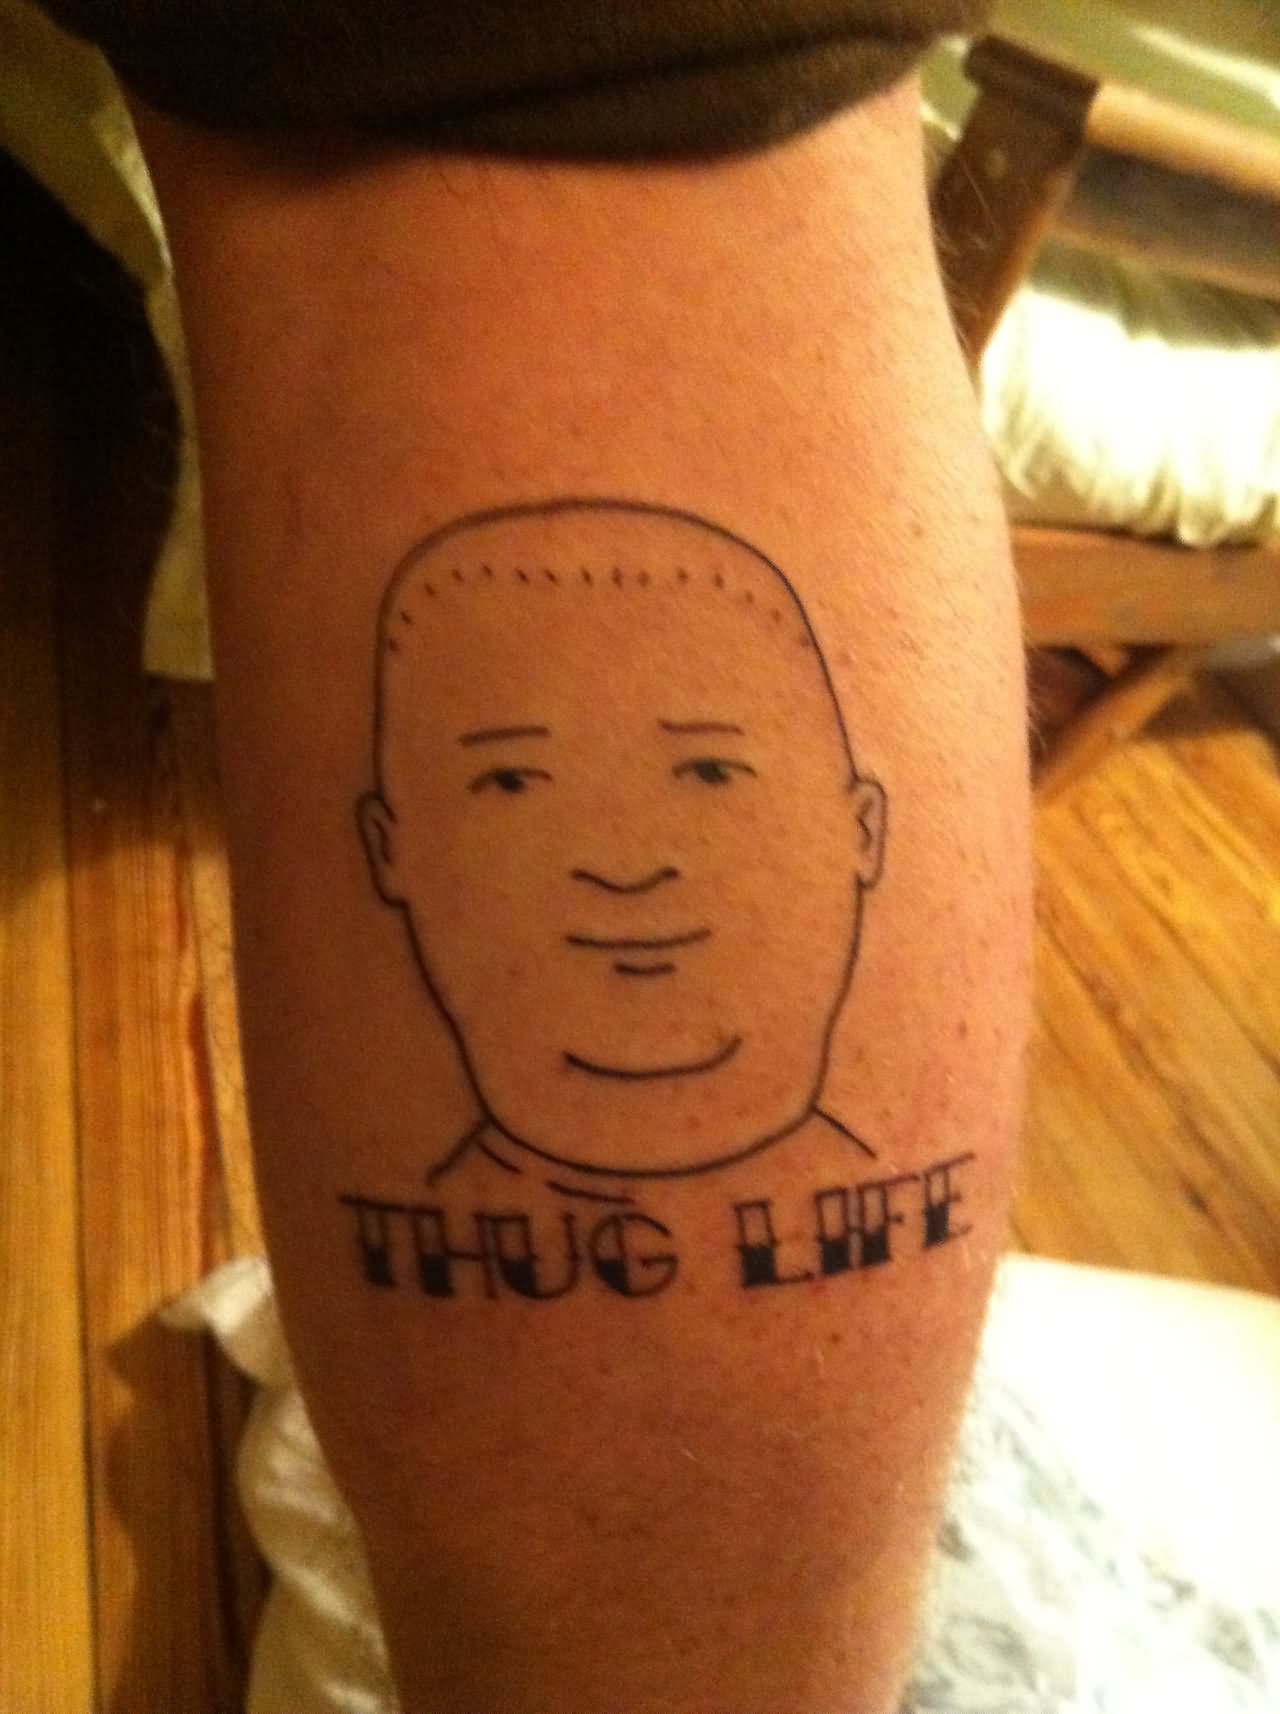 Face Thug Life Tattoo On Leg